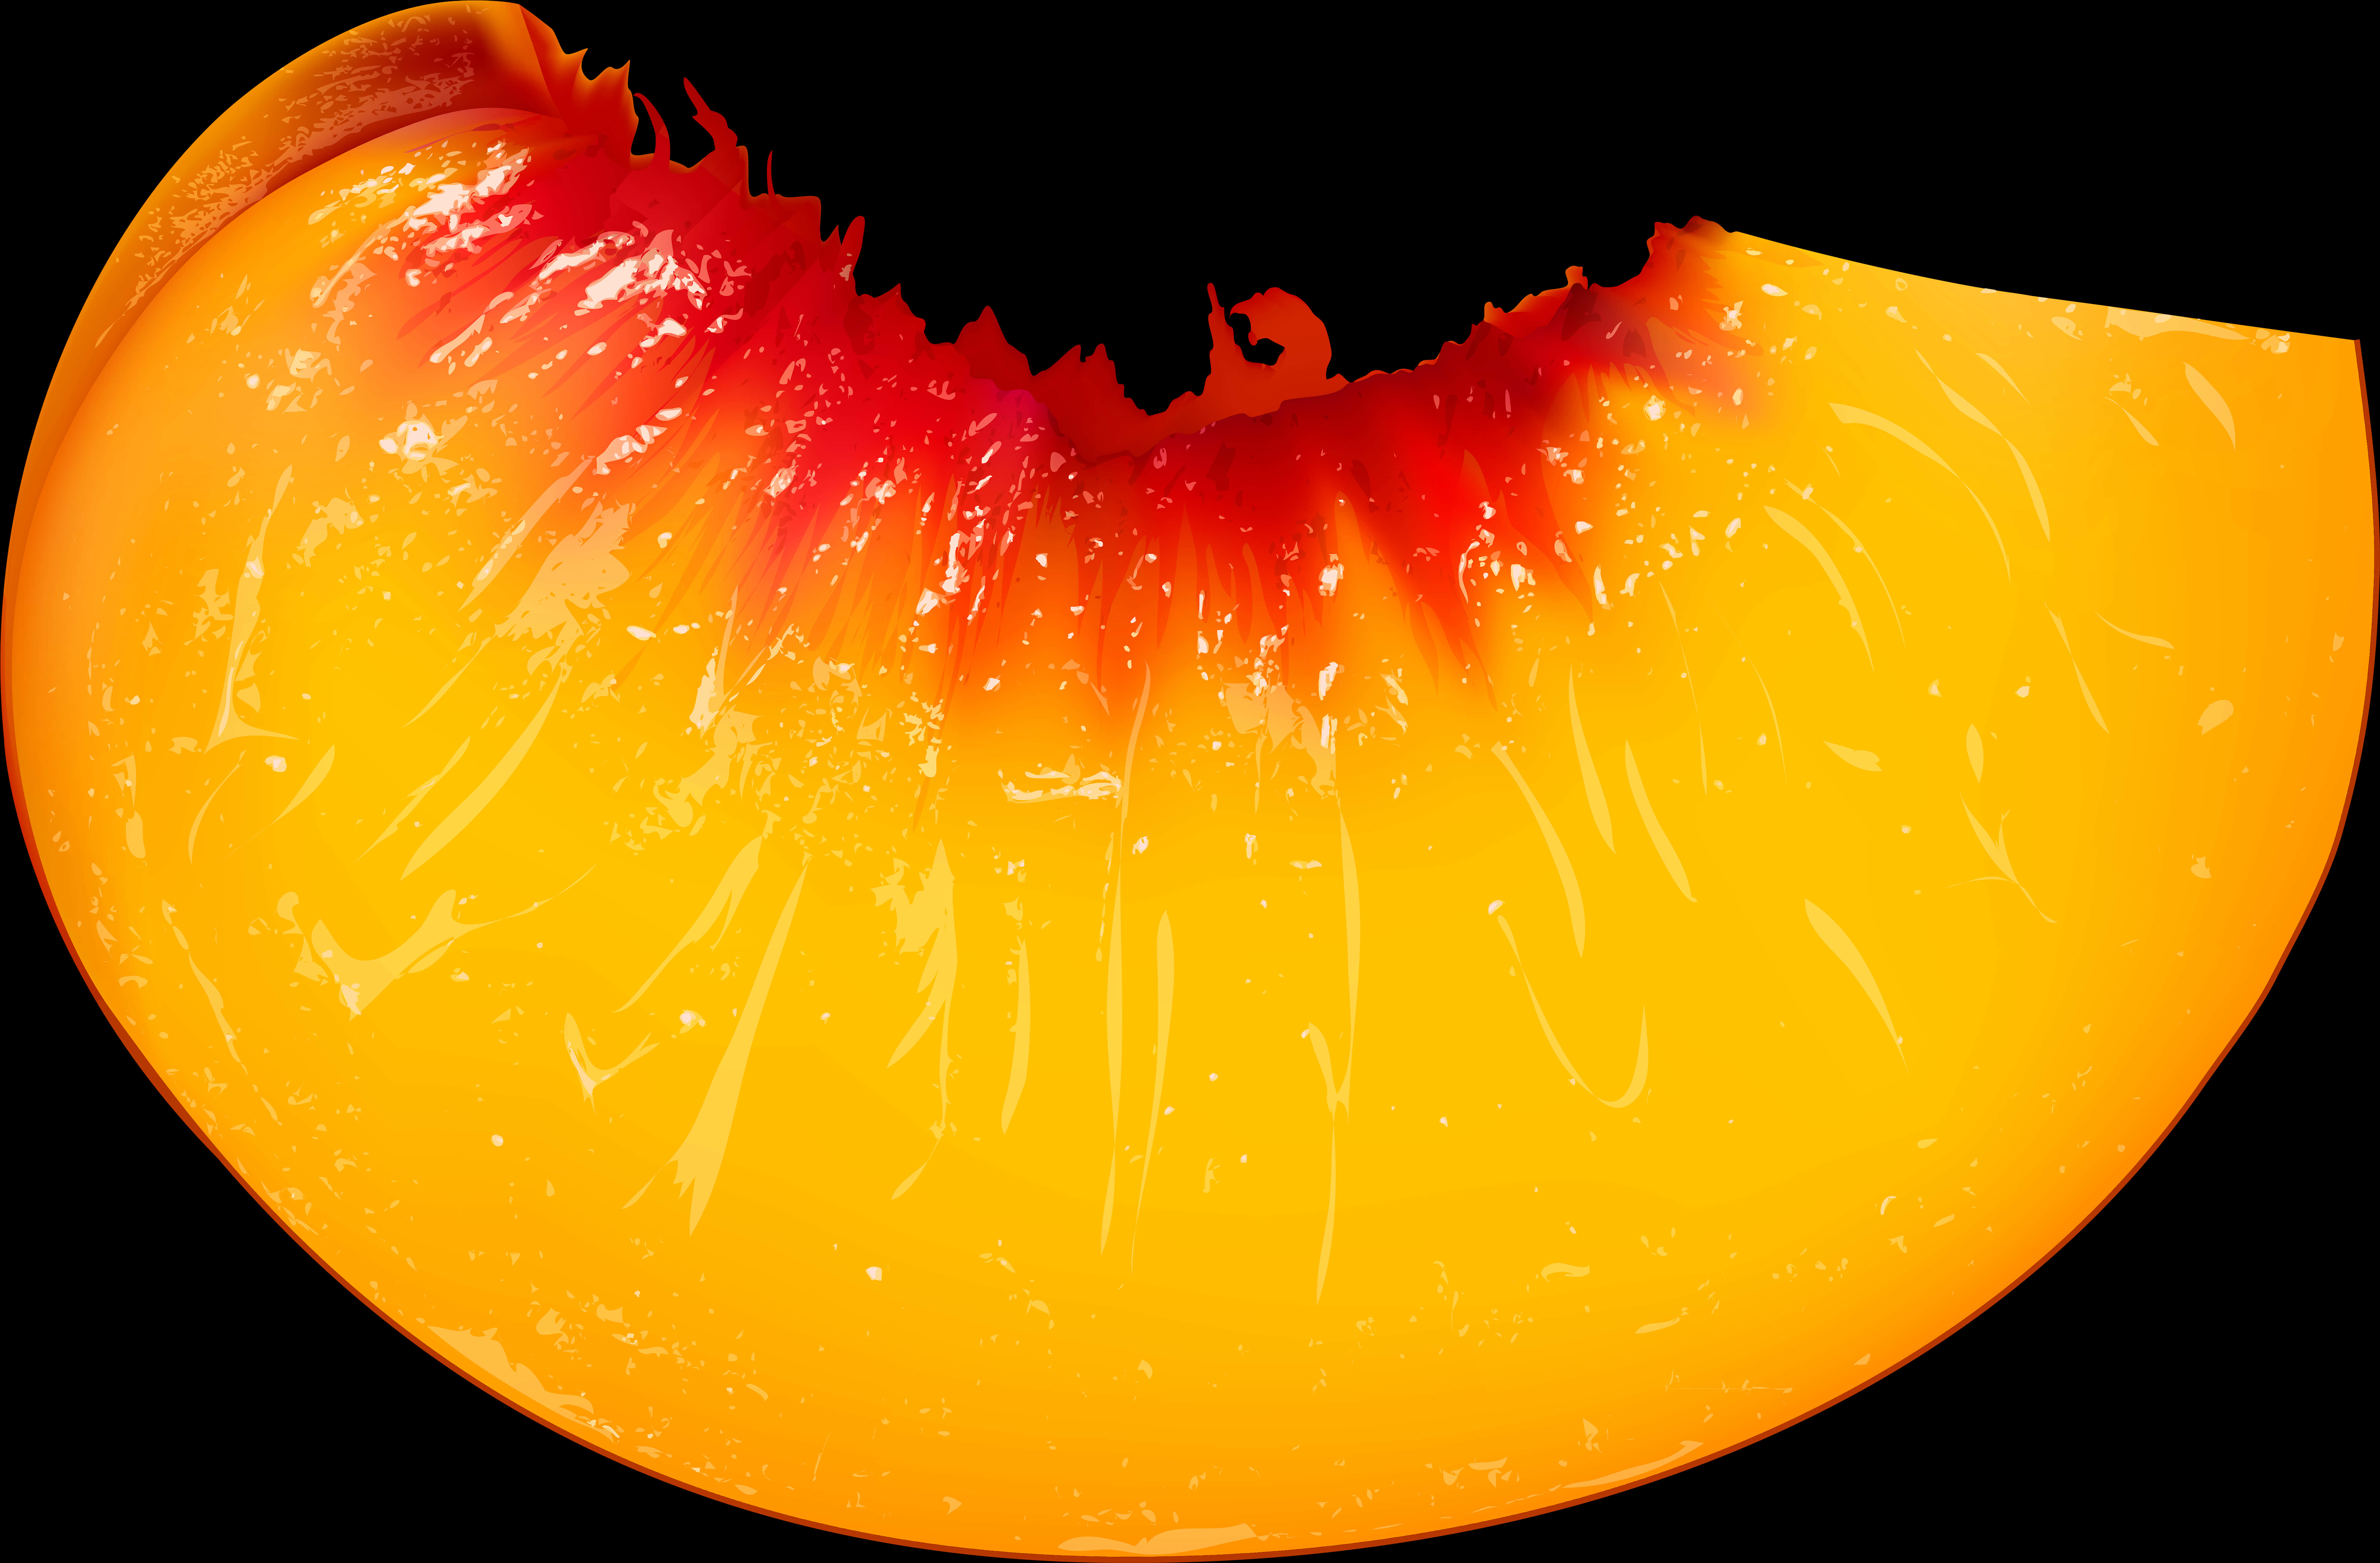 Juicy Peach Slice Closeup